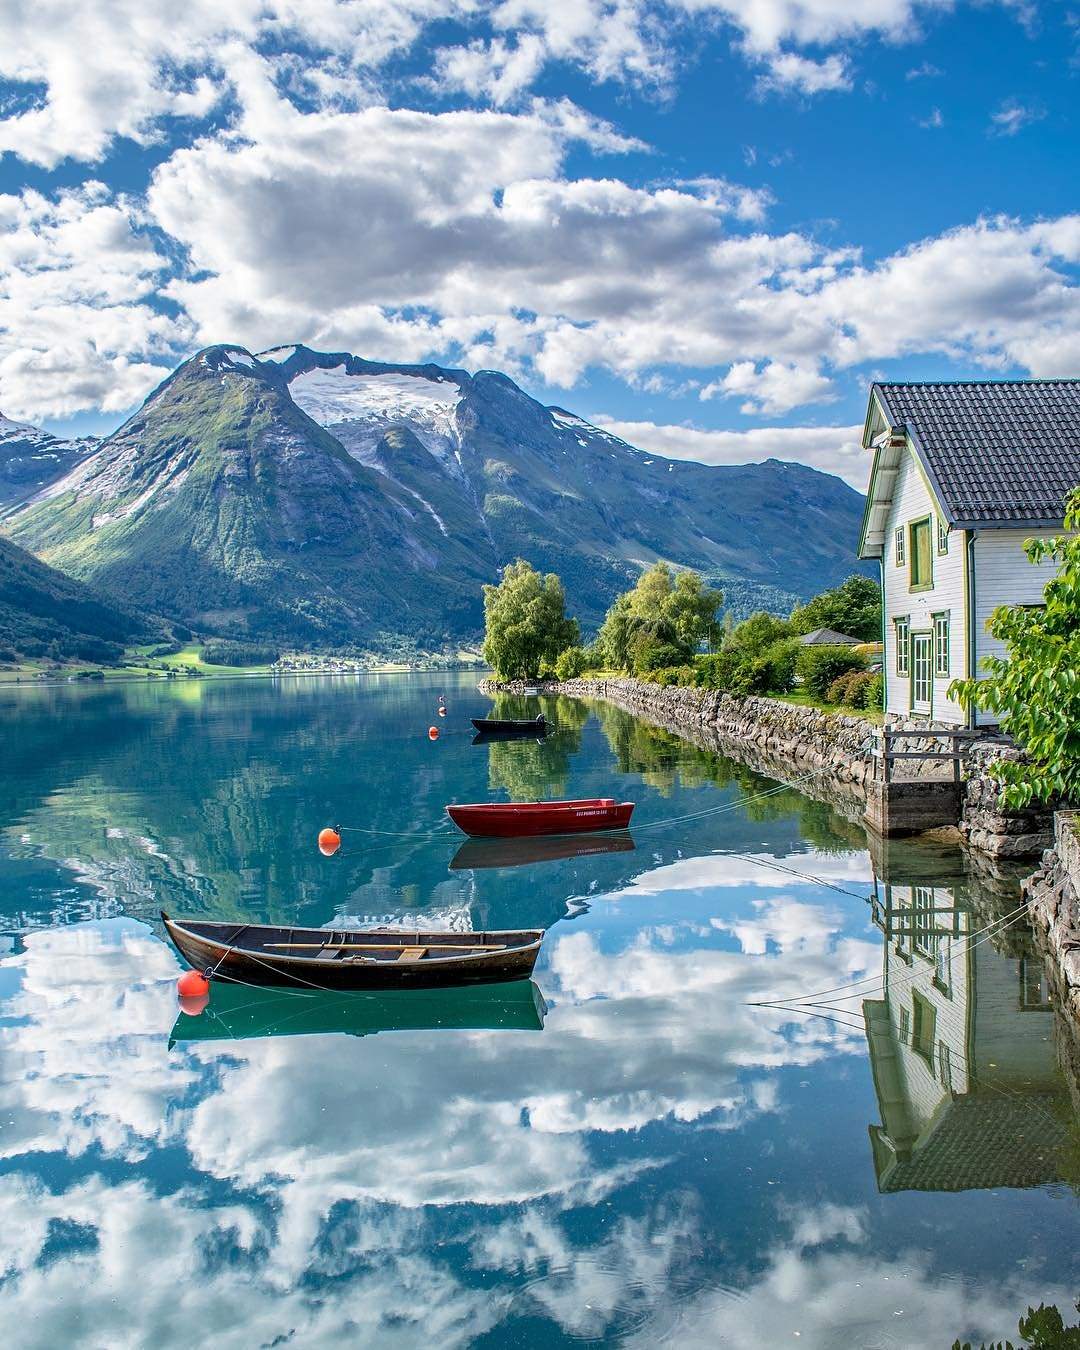 Oppstryn, Norway looking like a dream land..